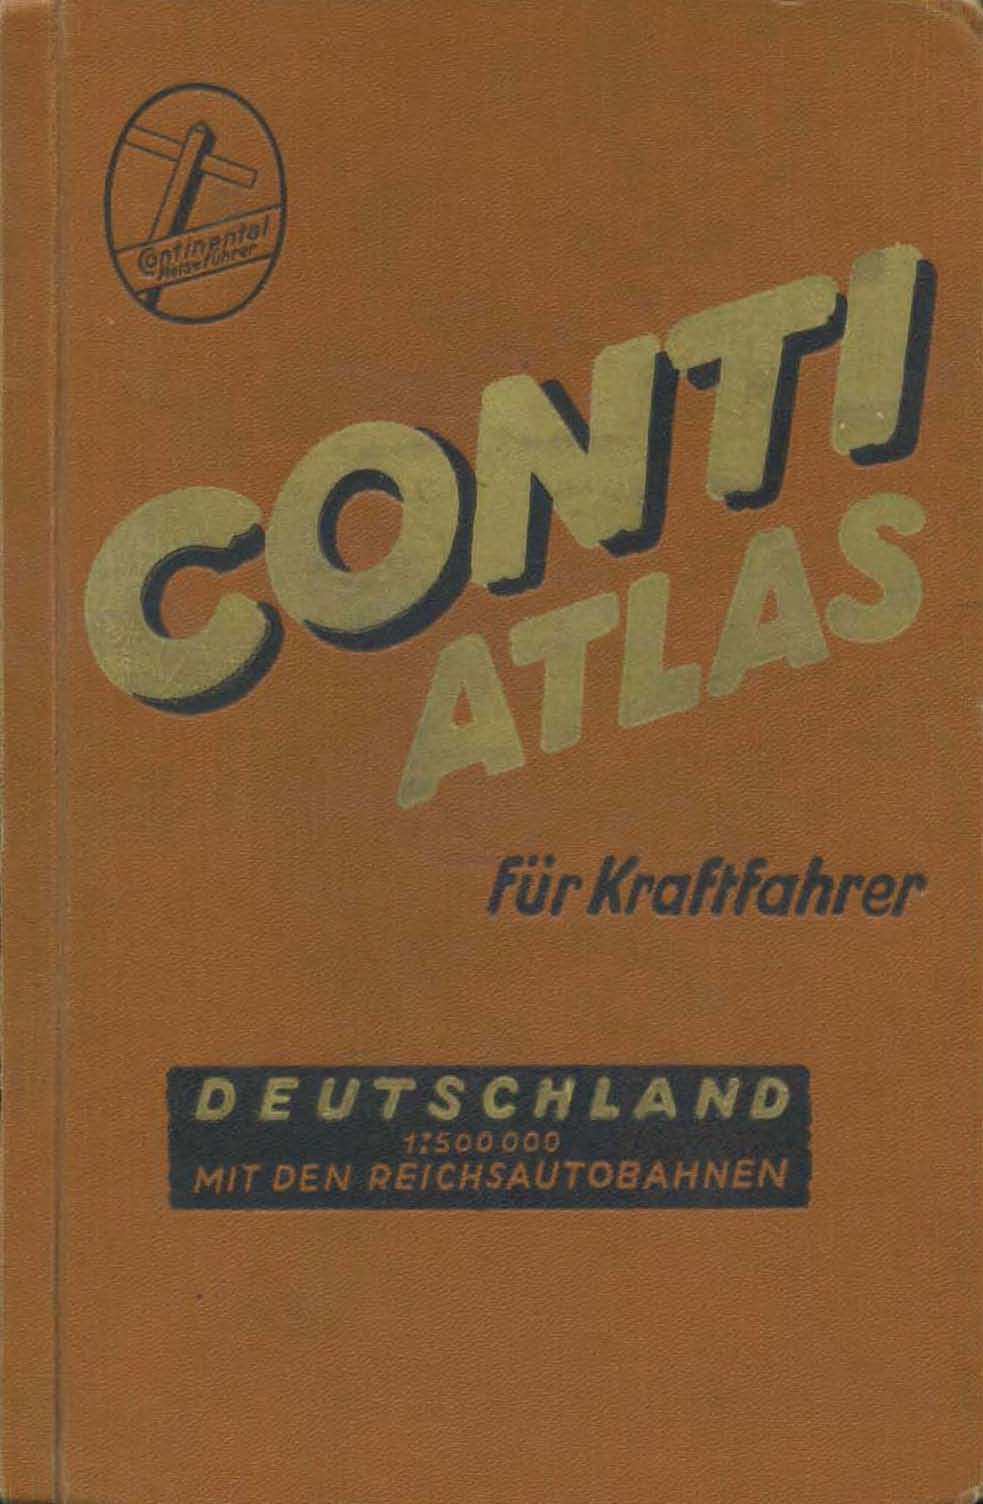 Conti Atlas für Kraftfahrer